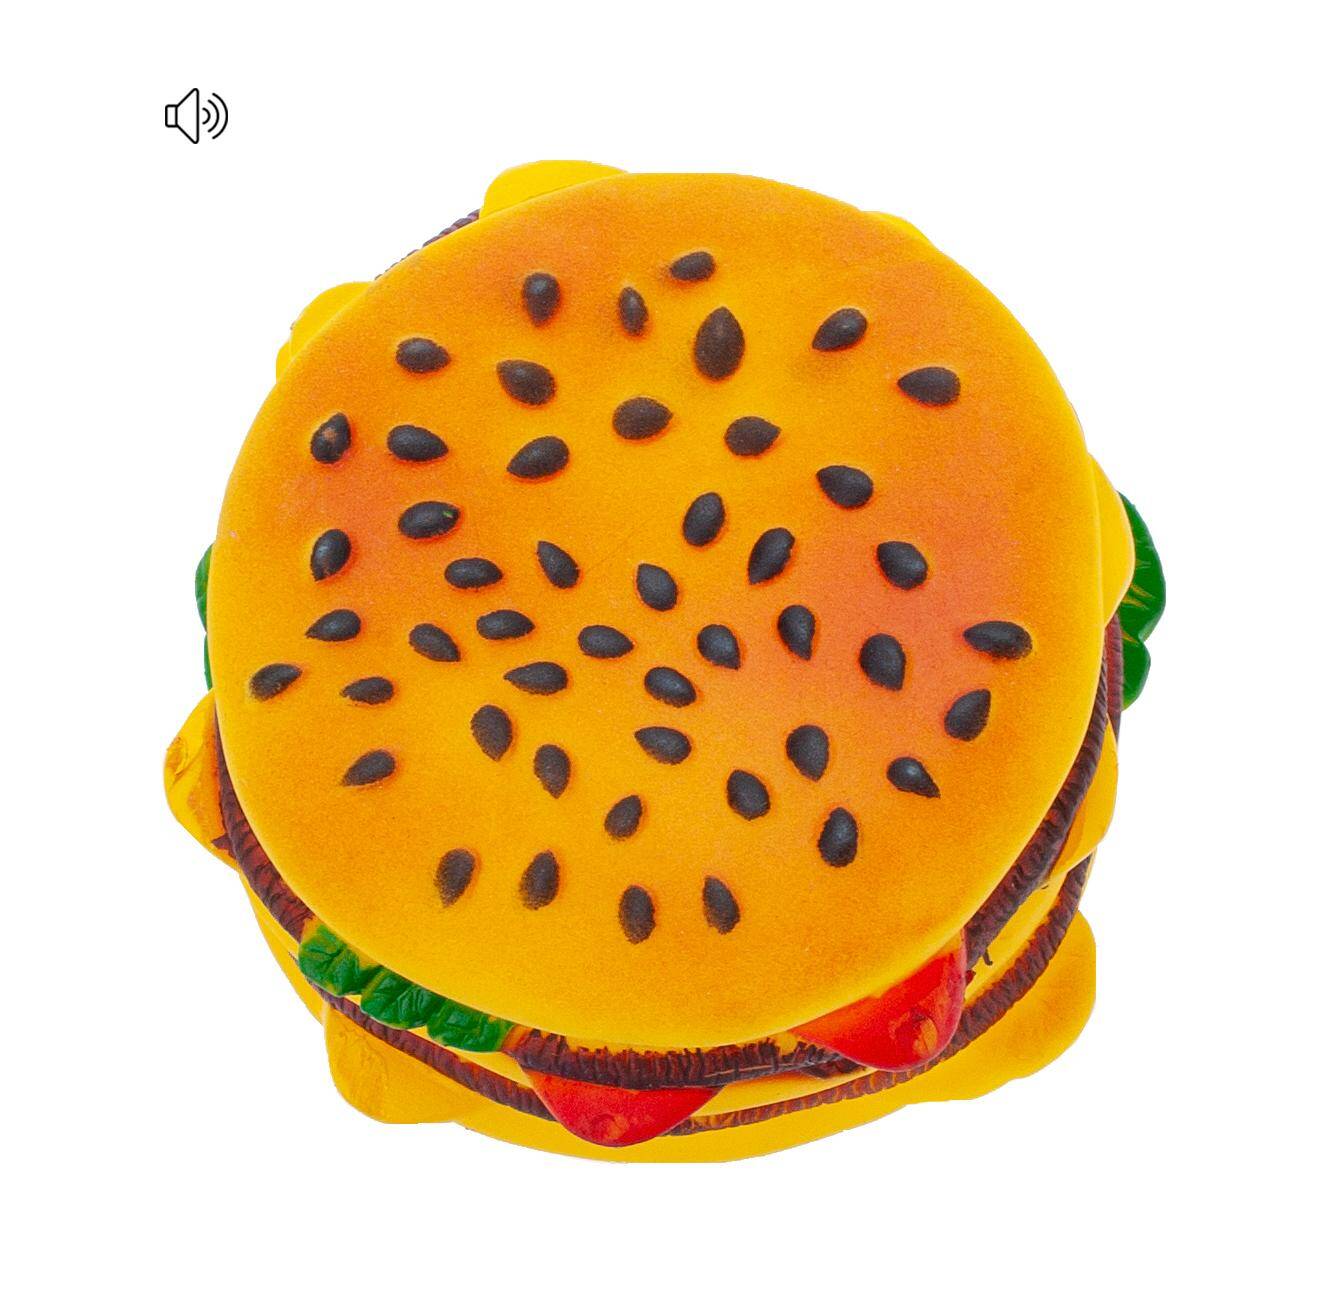 Vinyl-Spielzeug - hamburger HAPP (Z-Z050FI)